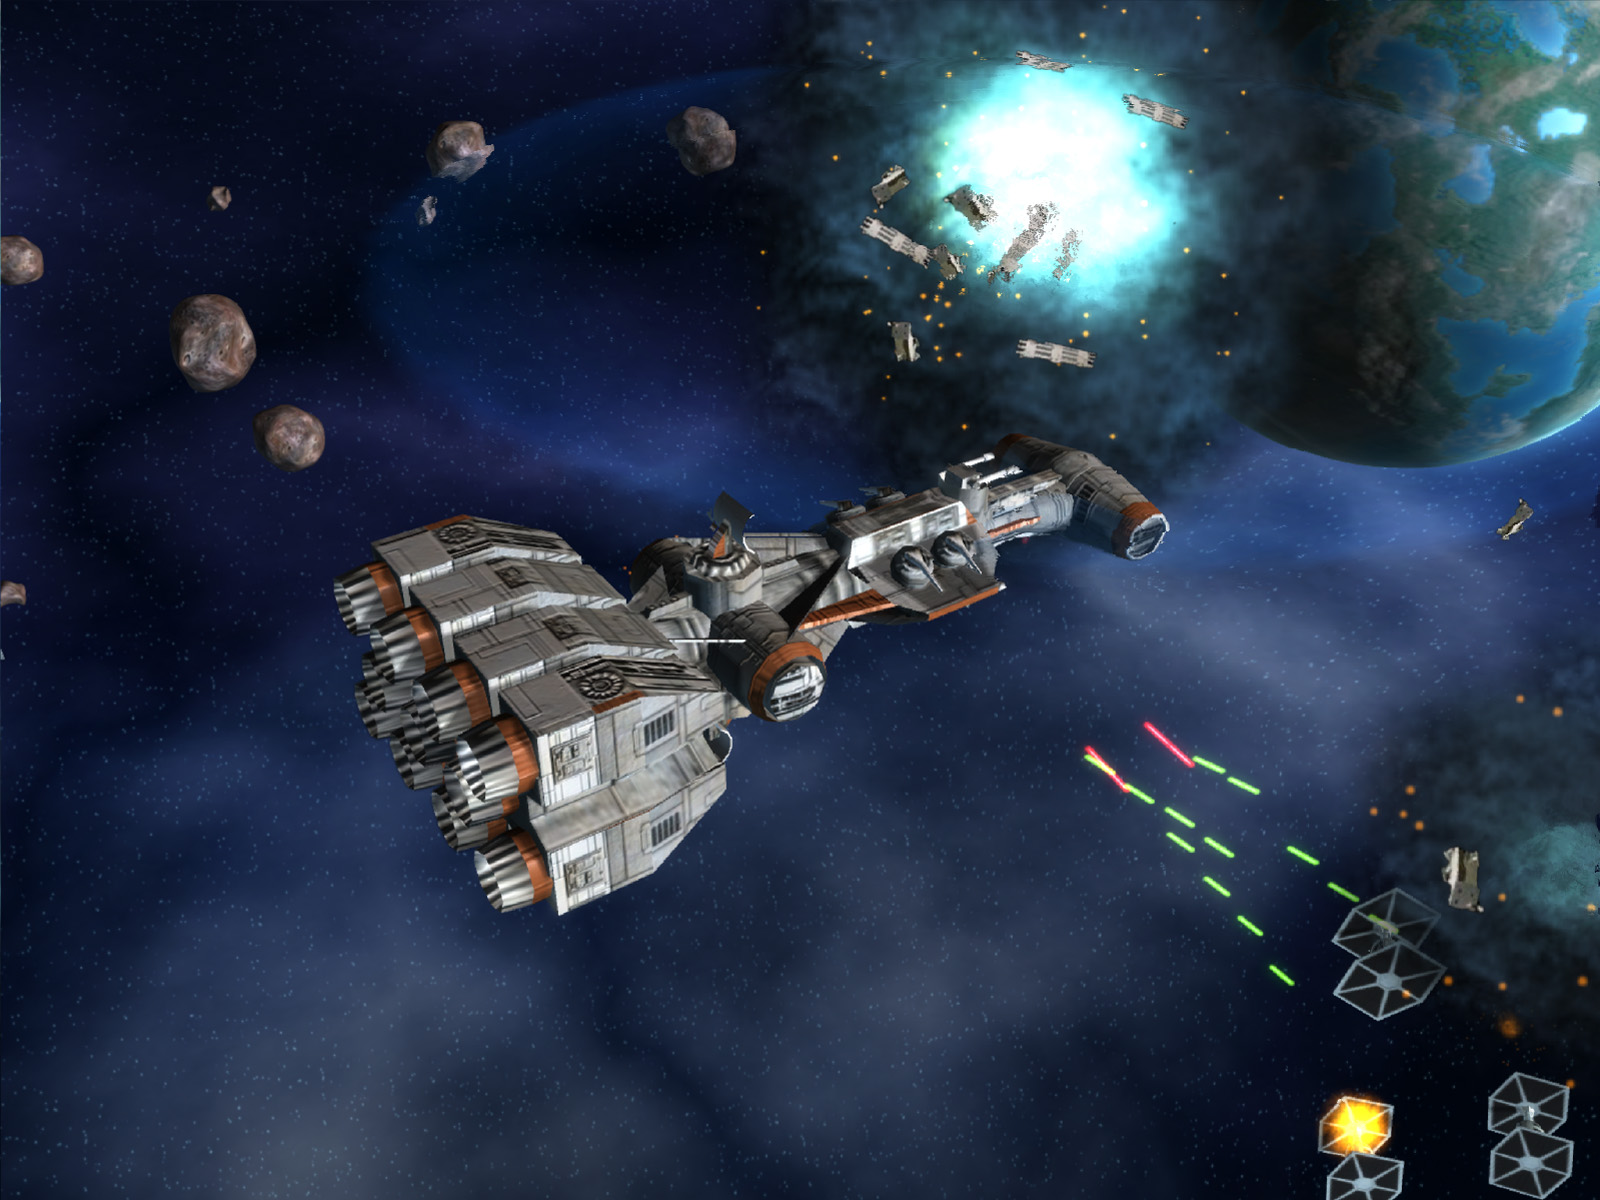 star wars empire at war download full game free